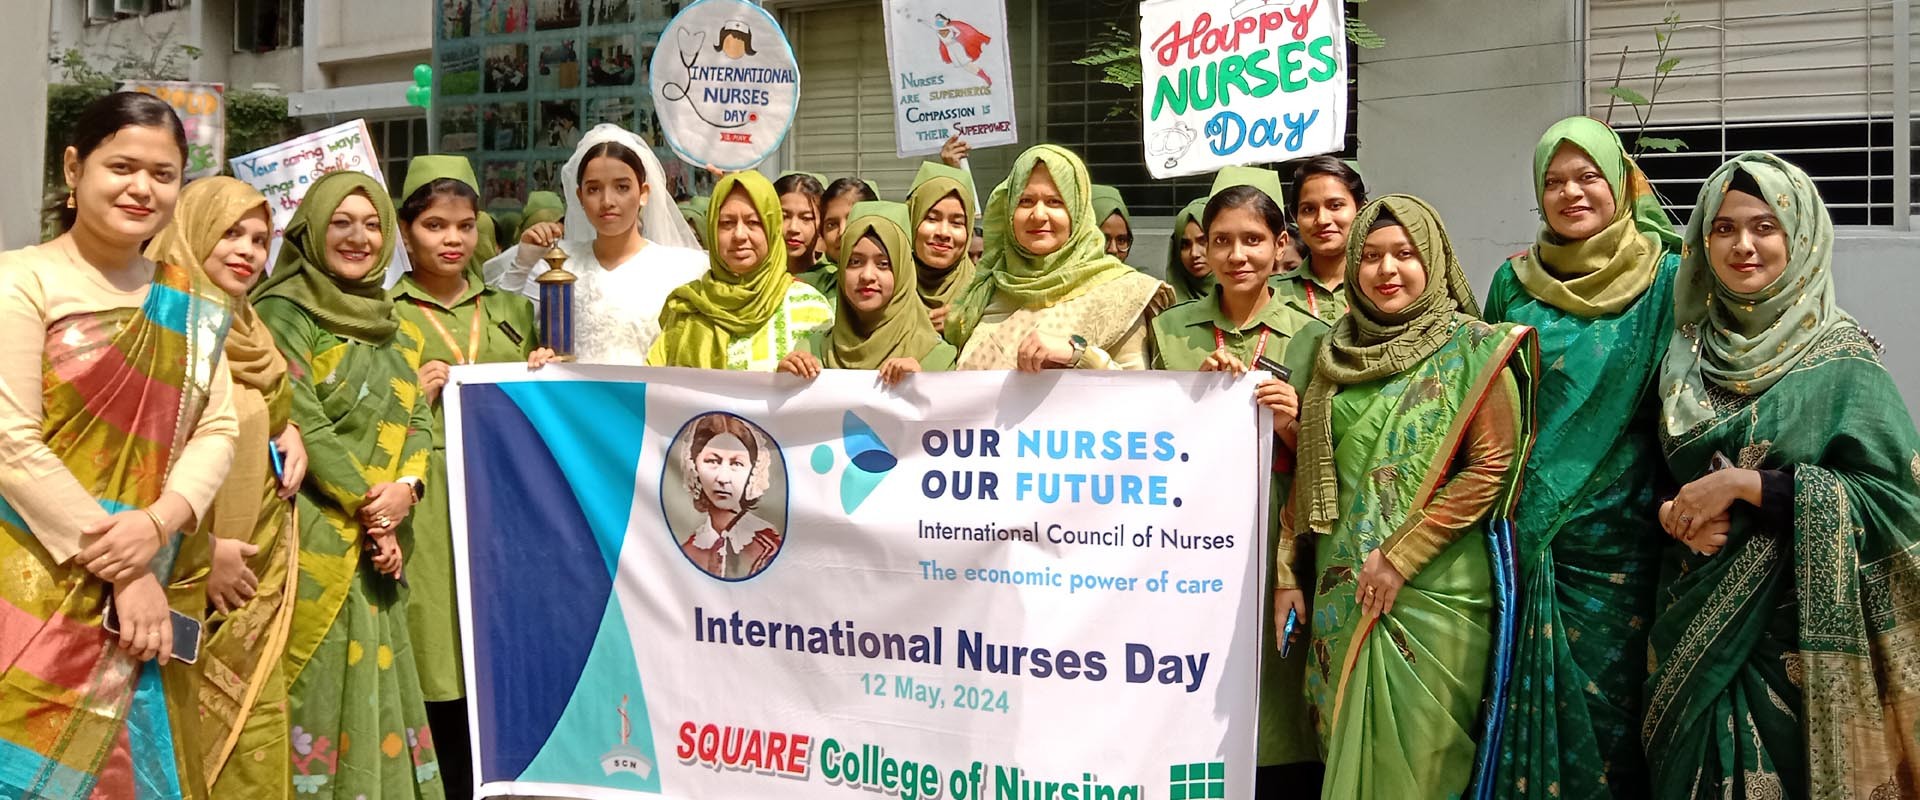 International Nurses Day, 12 May, 2024